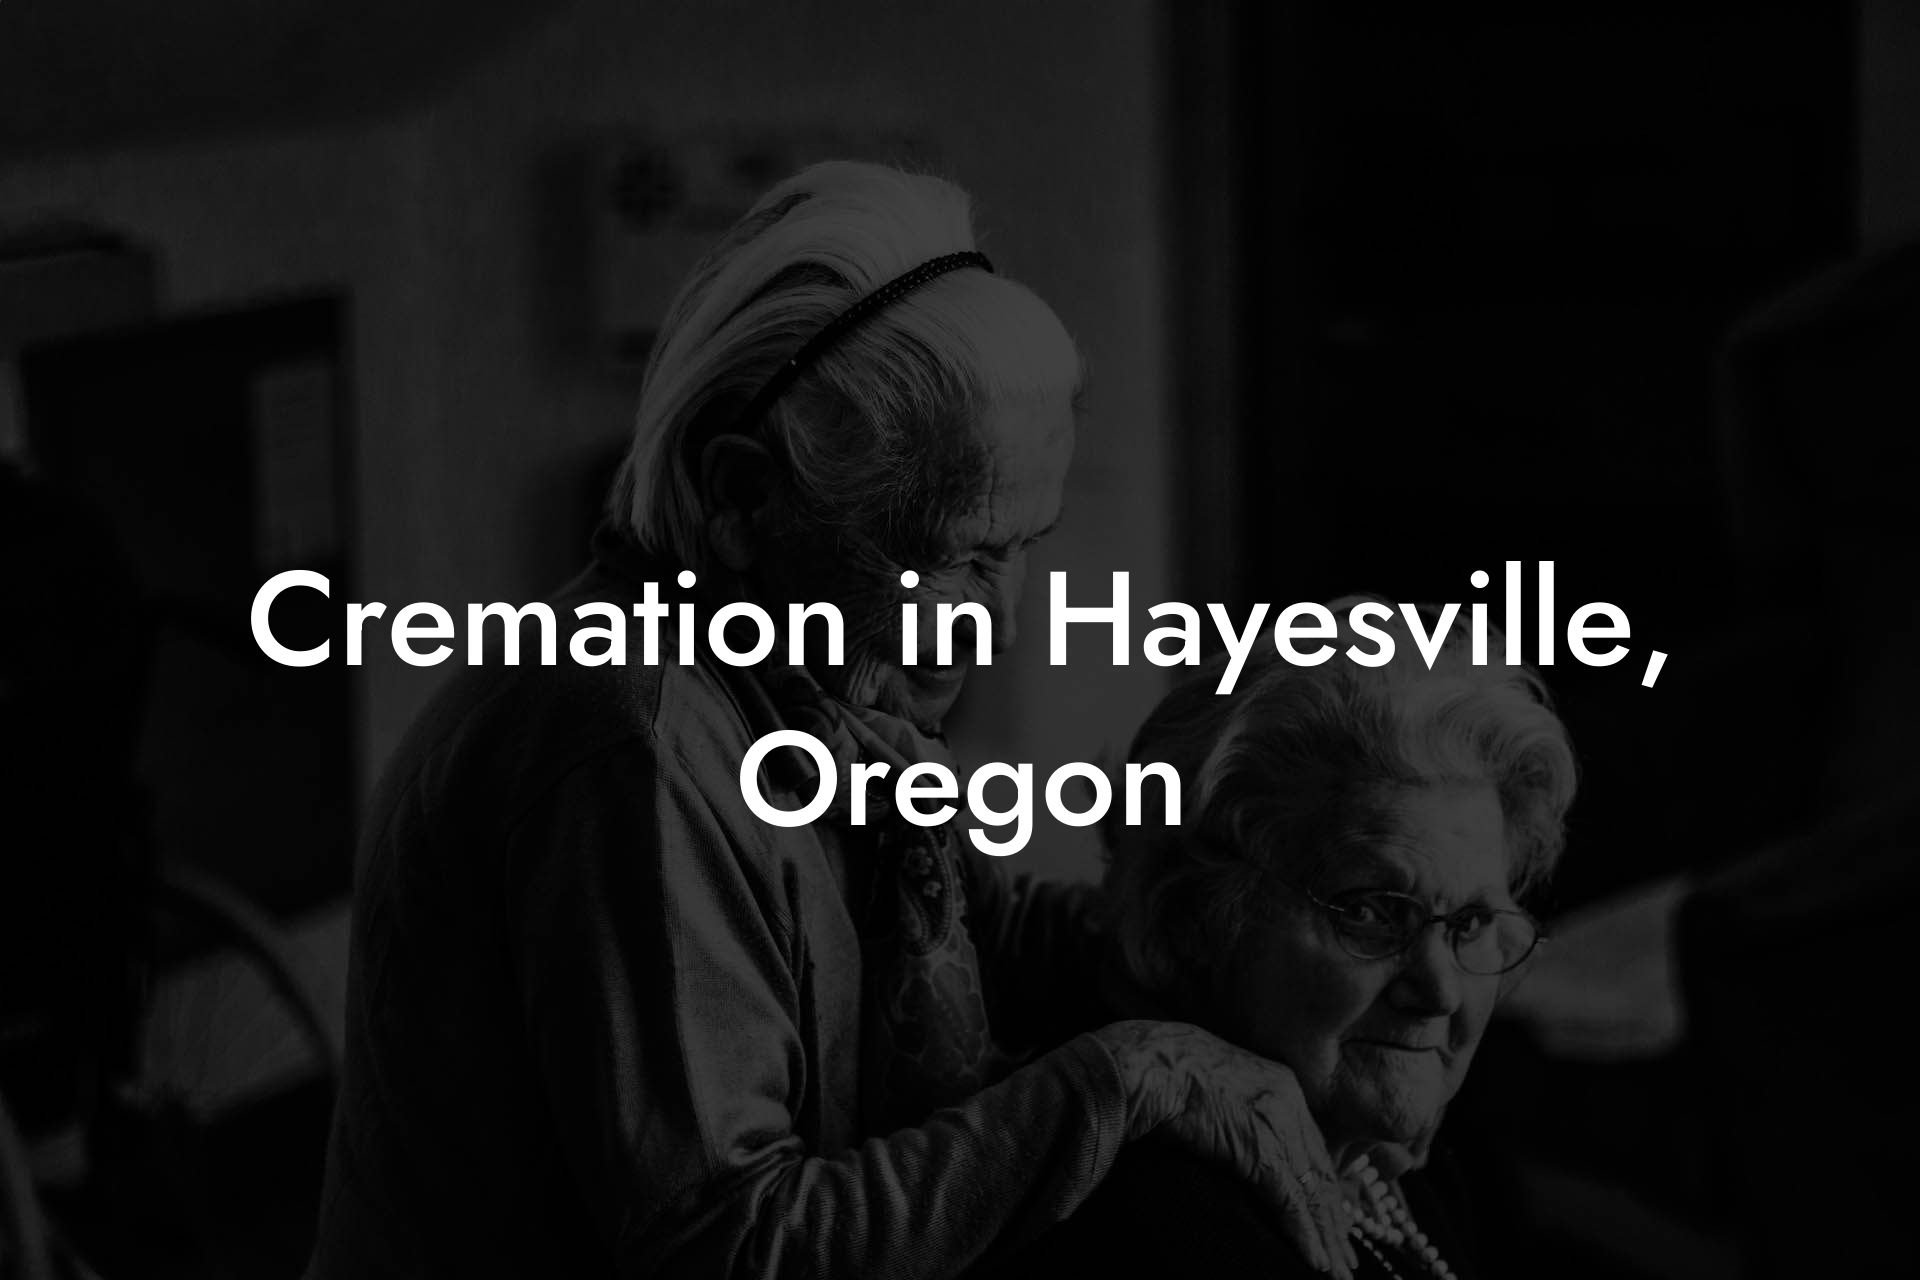 Cremation in Hayesville, Oregon